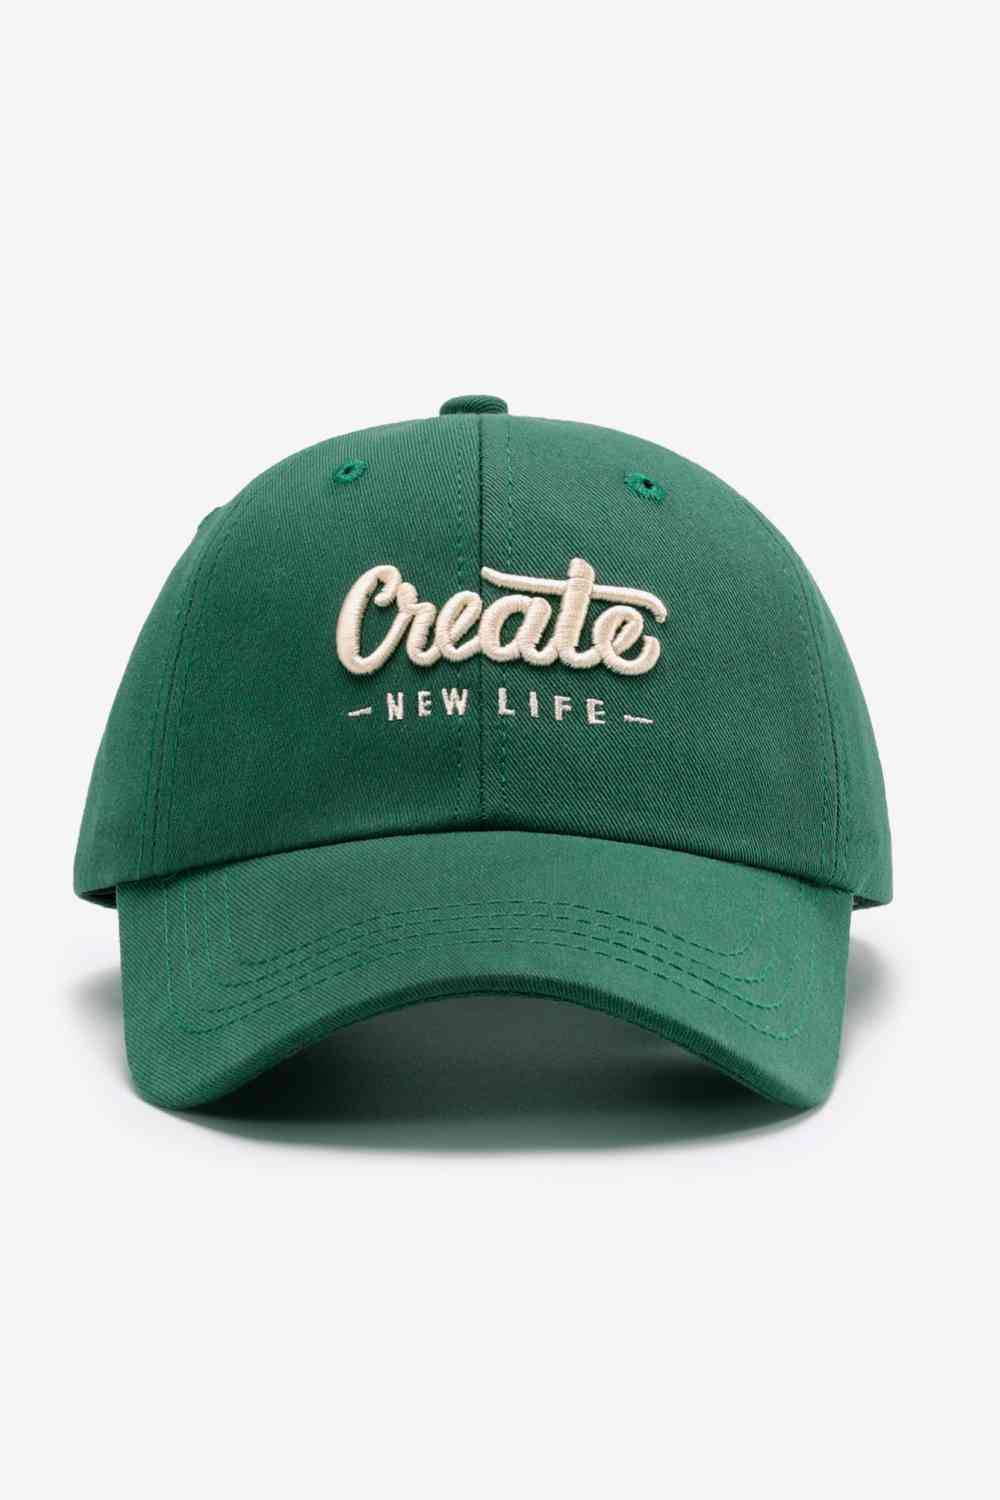 CREATE NEW LIFE Adjustable Cotton Baseball Cap - Rose Gold Co. Shop